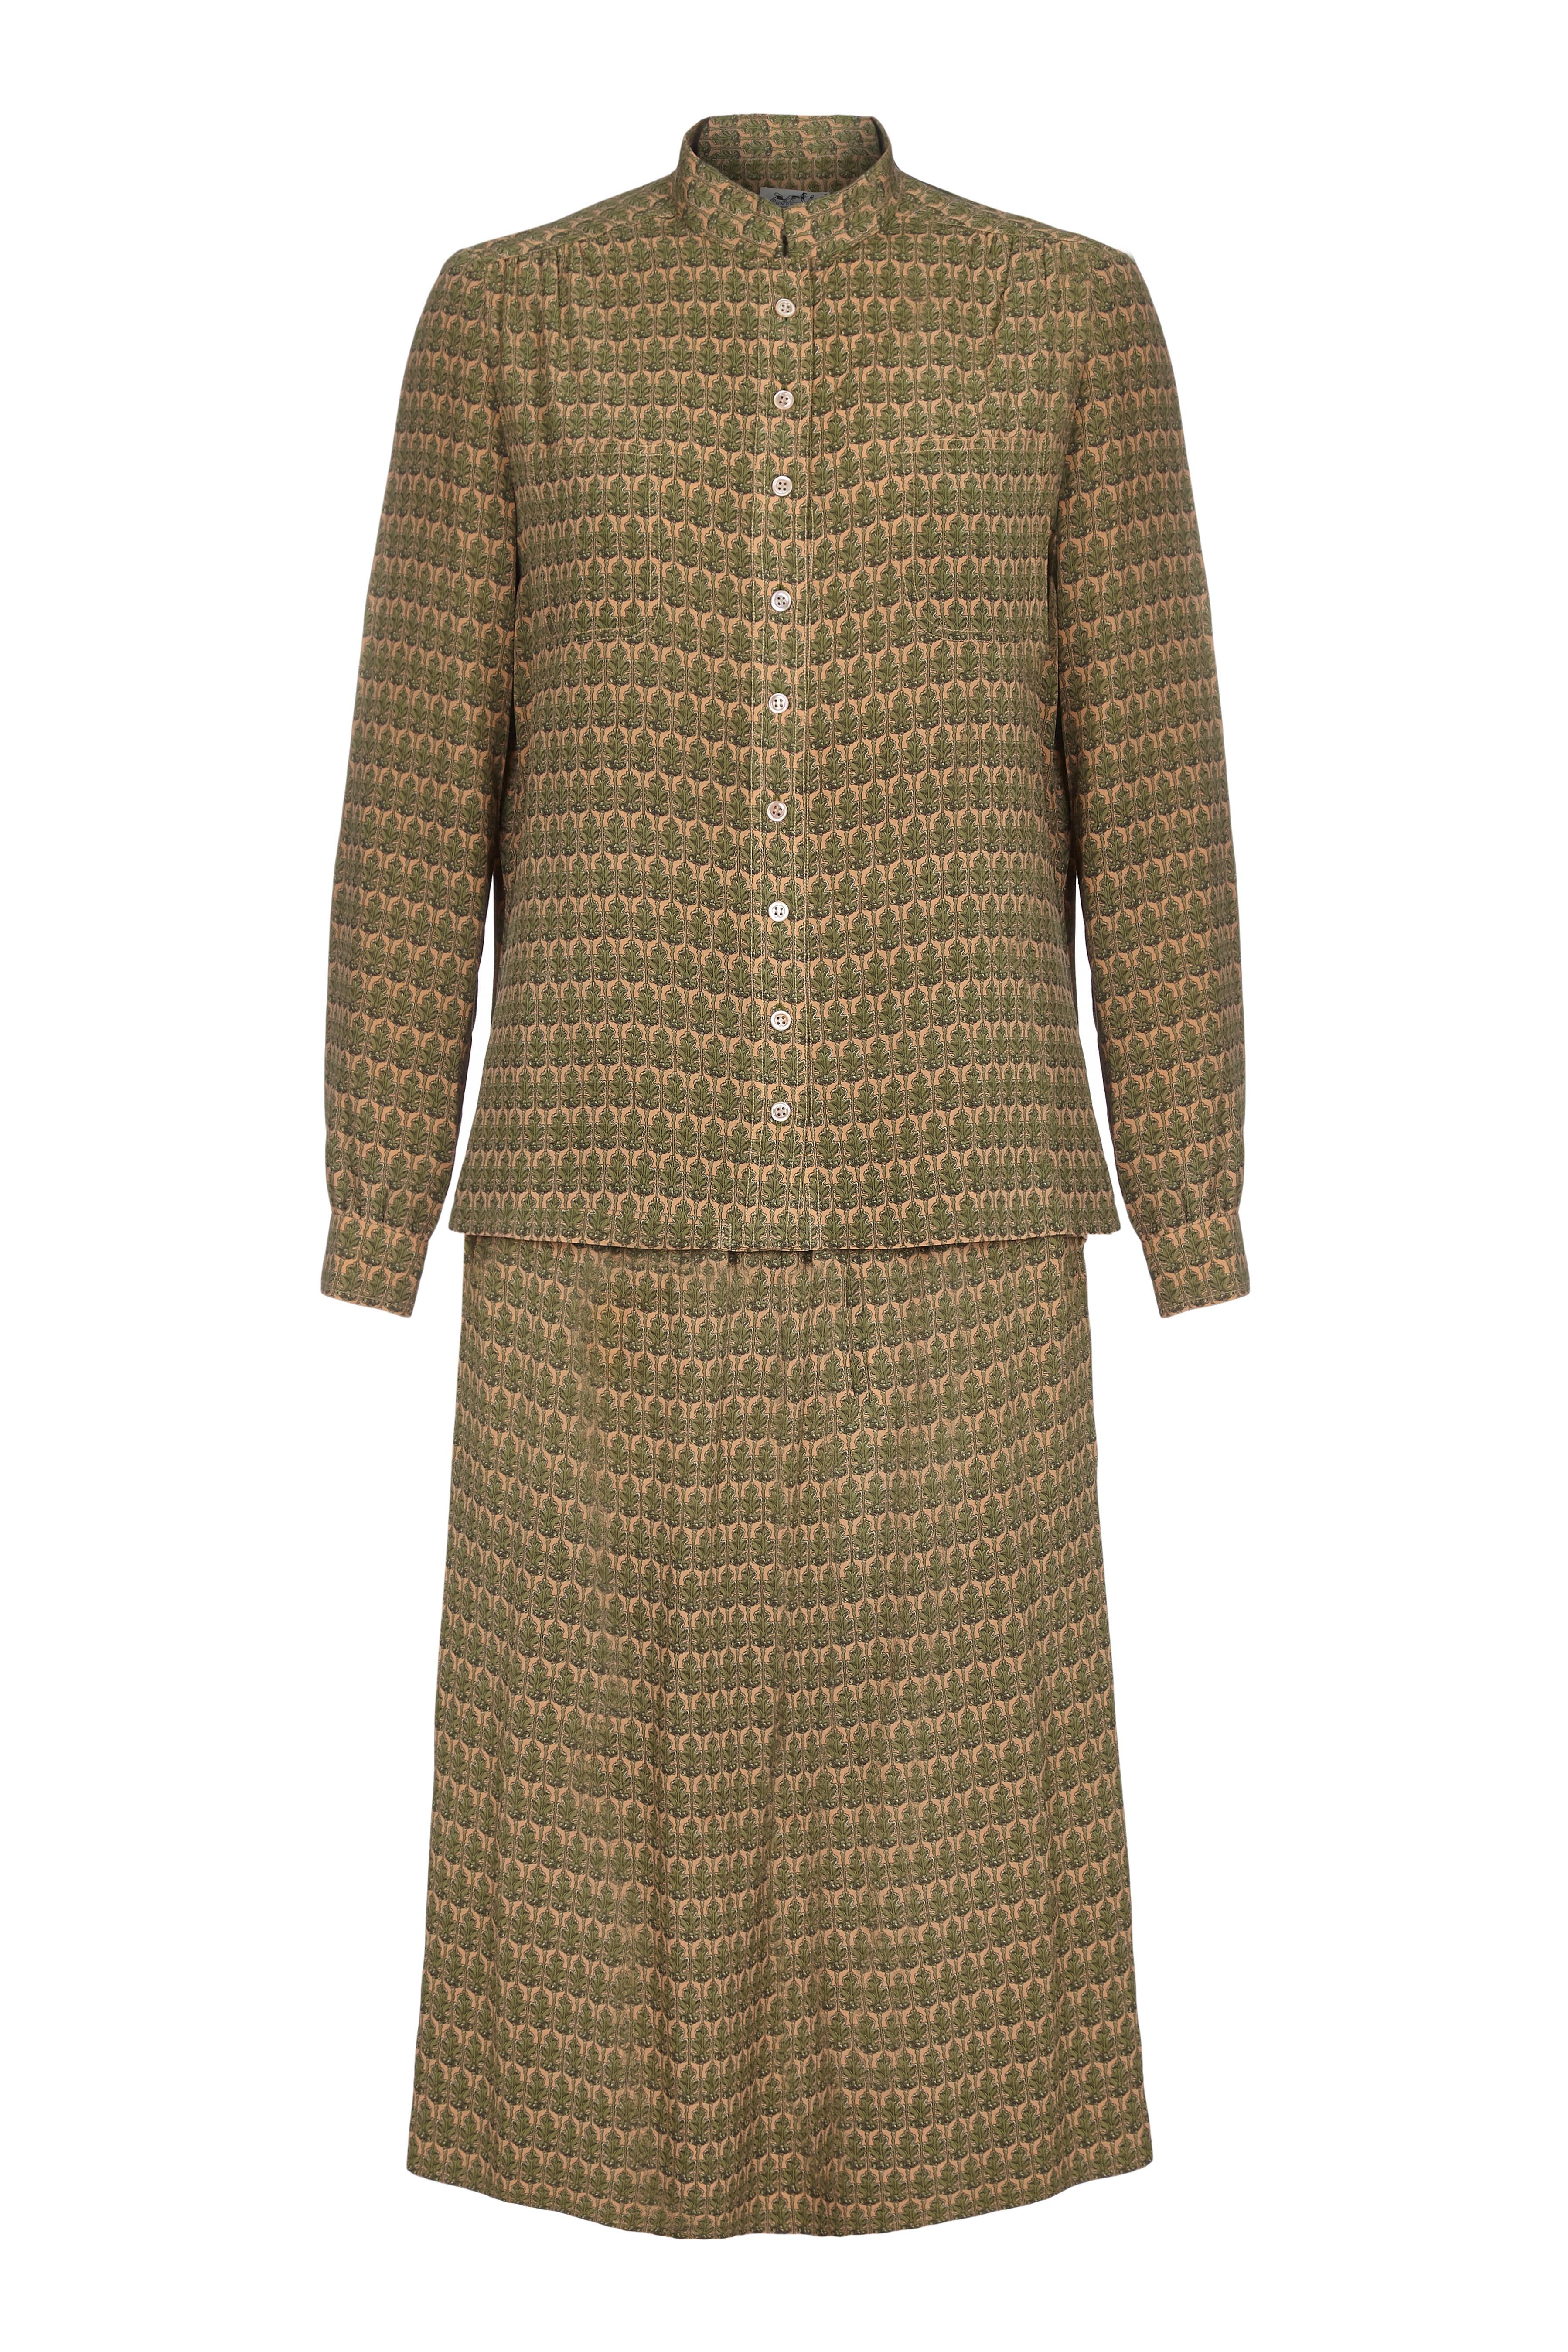 Brown Hermes 1970s Silk Sage Green Oakleaf Print Blouse and Skirt Suit